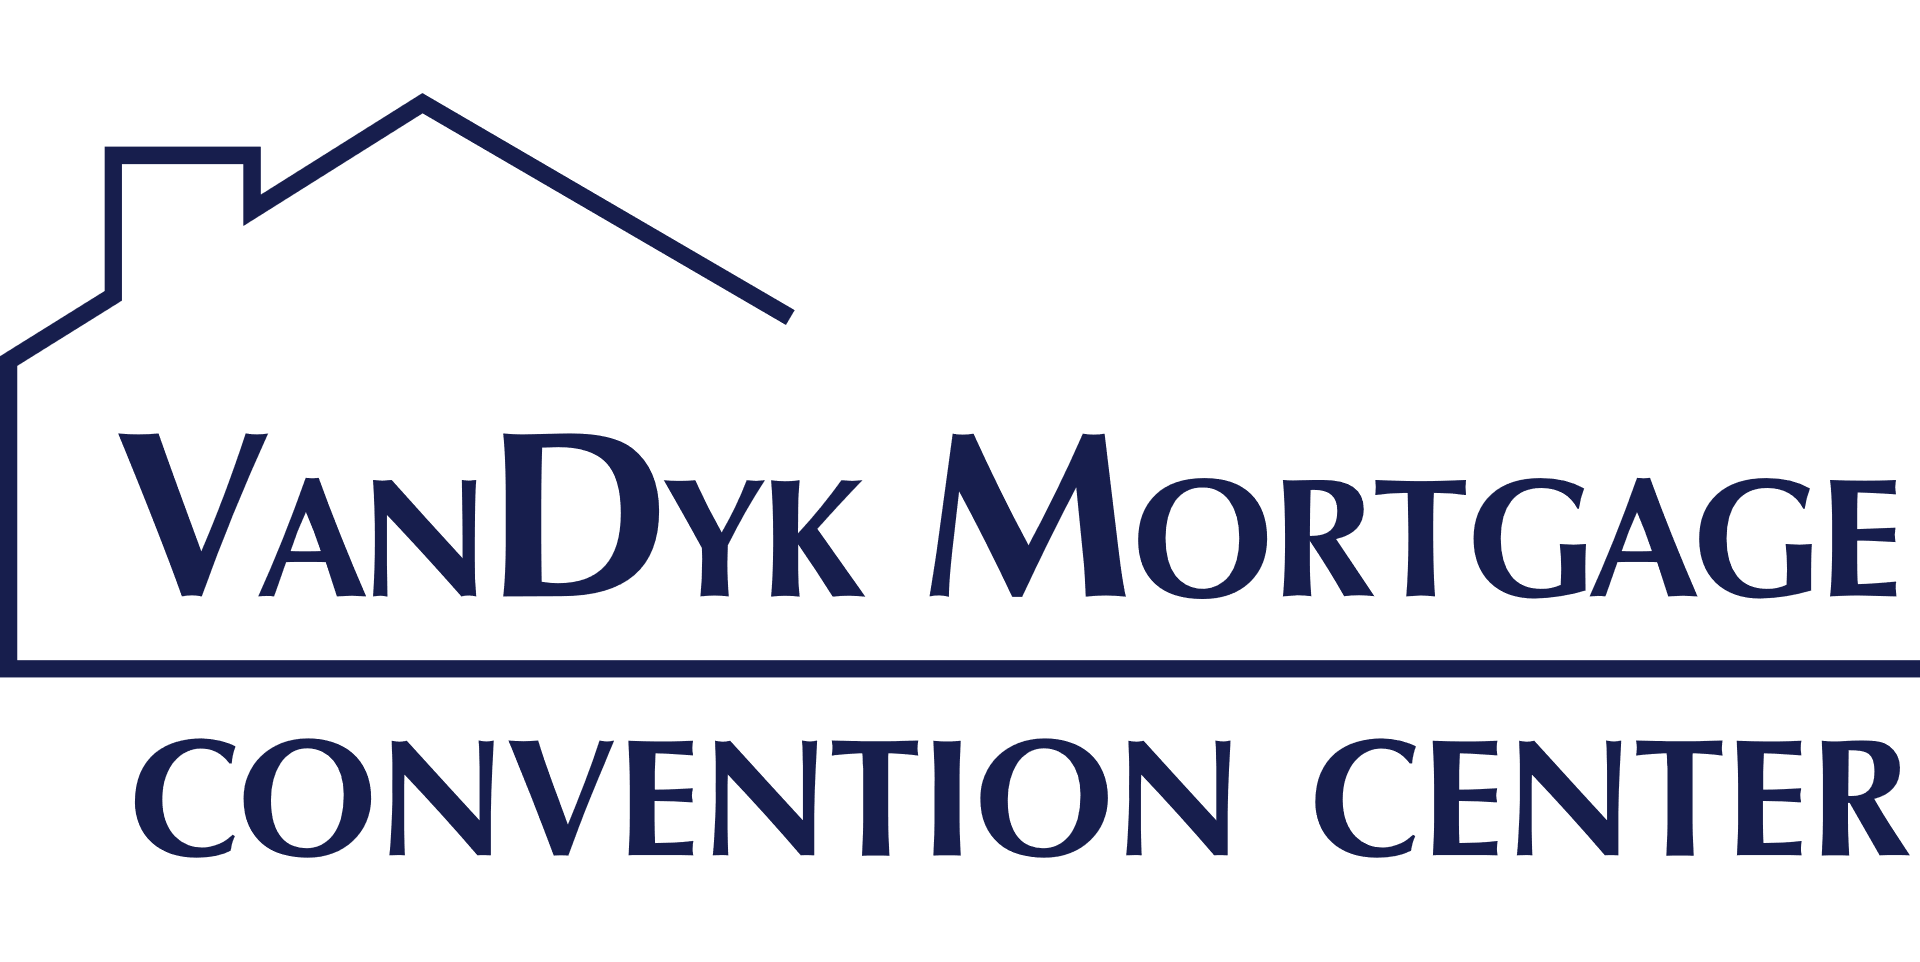 VanDyk Mortgage Convention Center